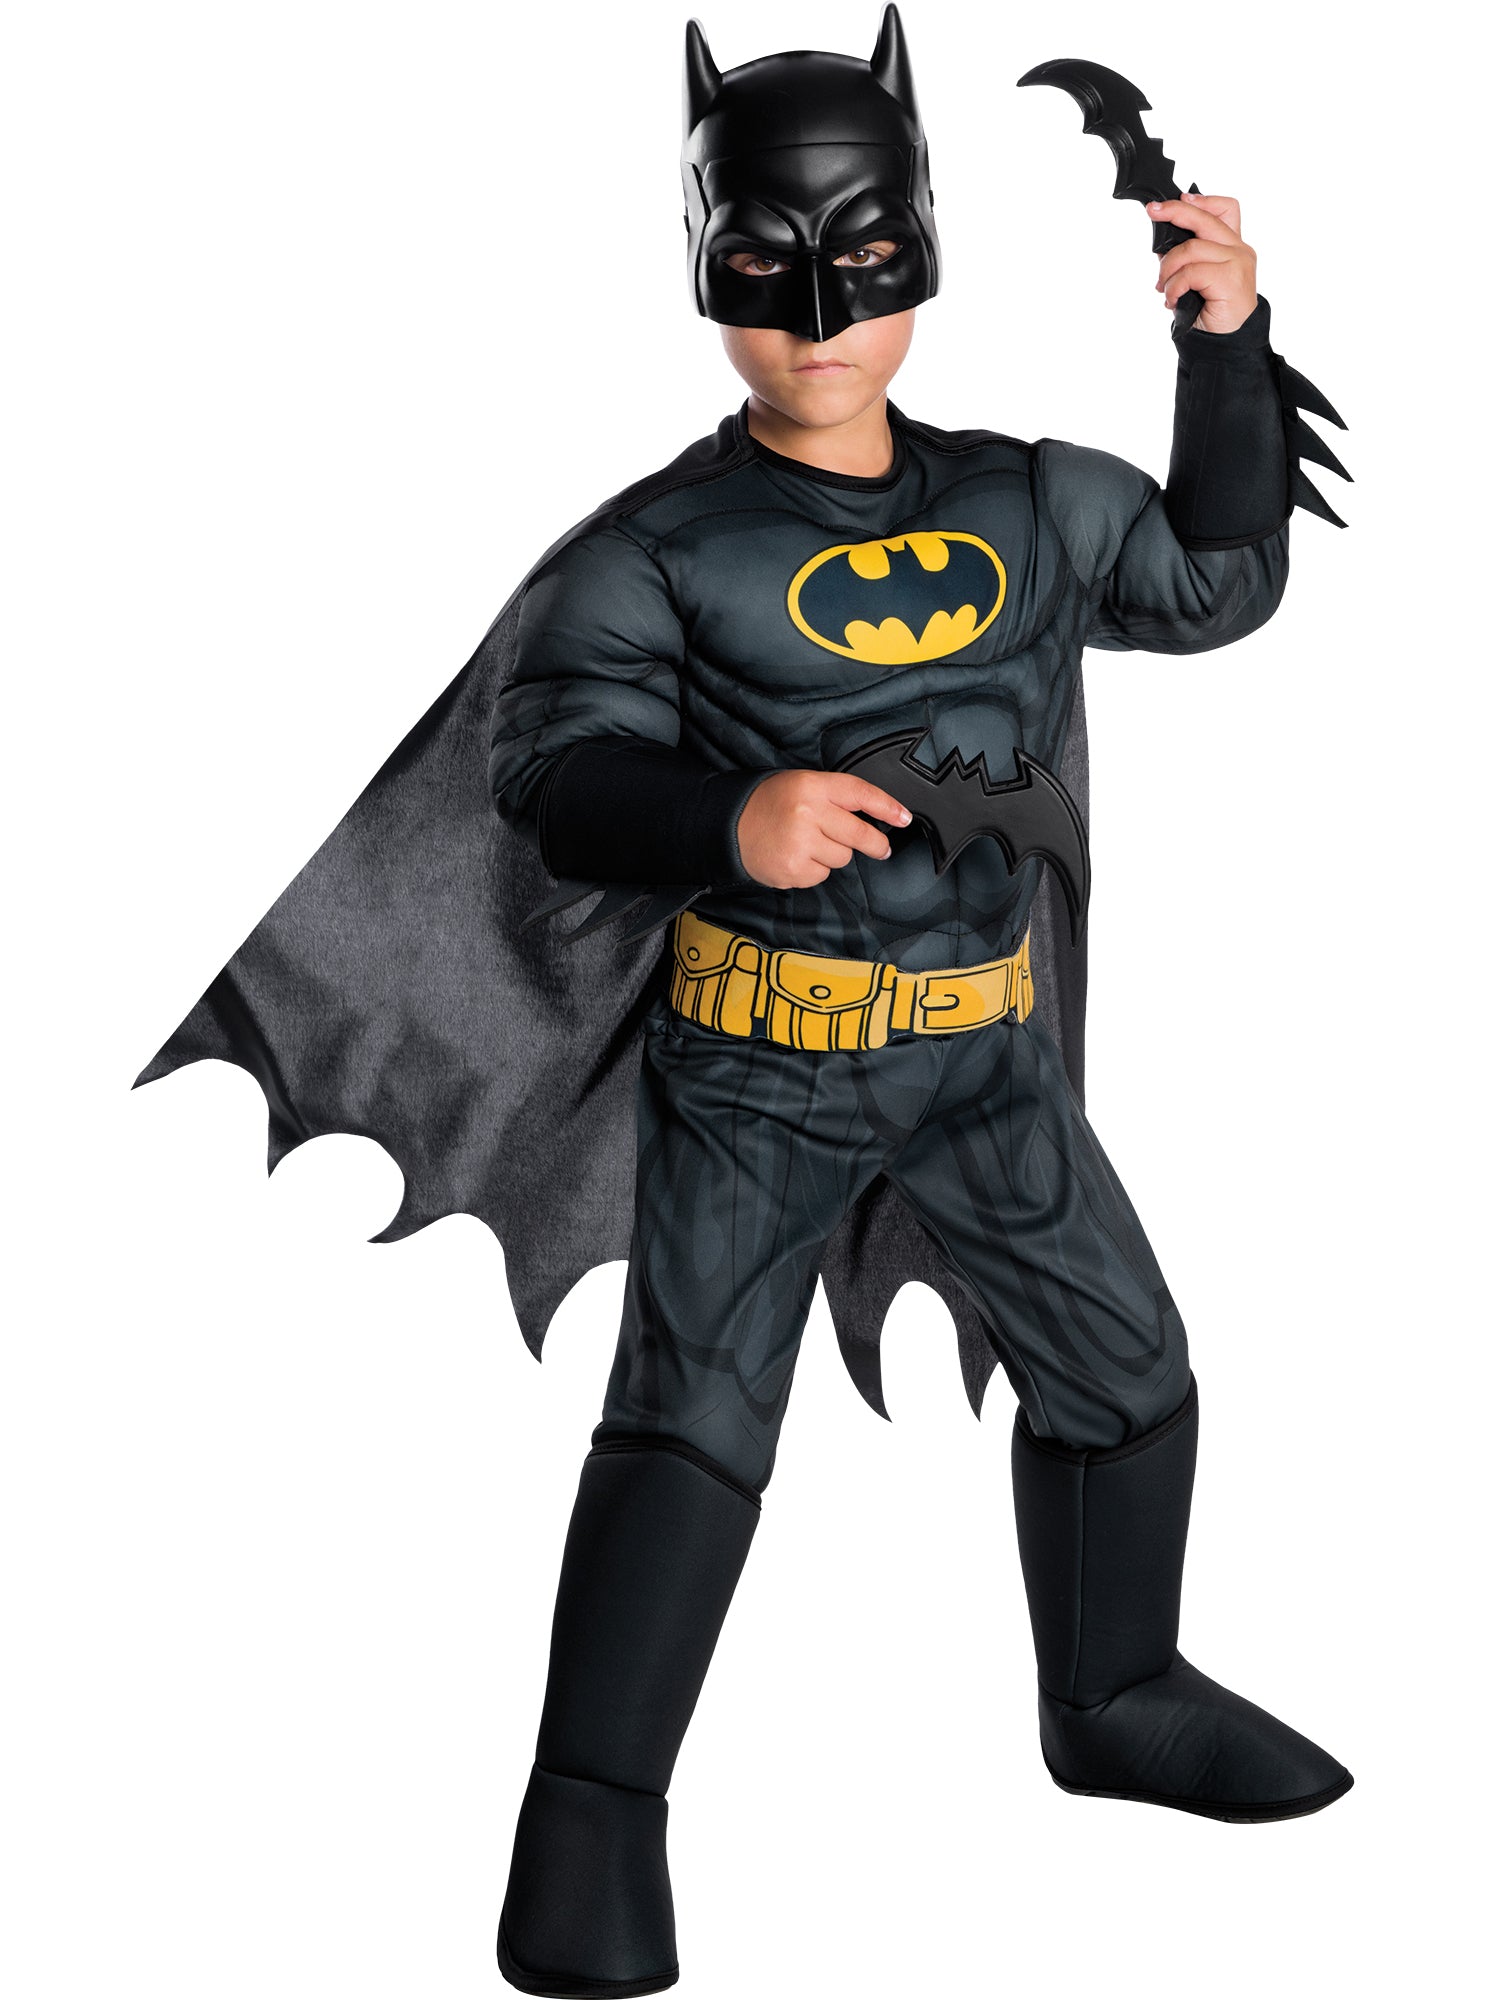 Kids Justice League Batman Deluxe Costume - costumes.com